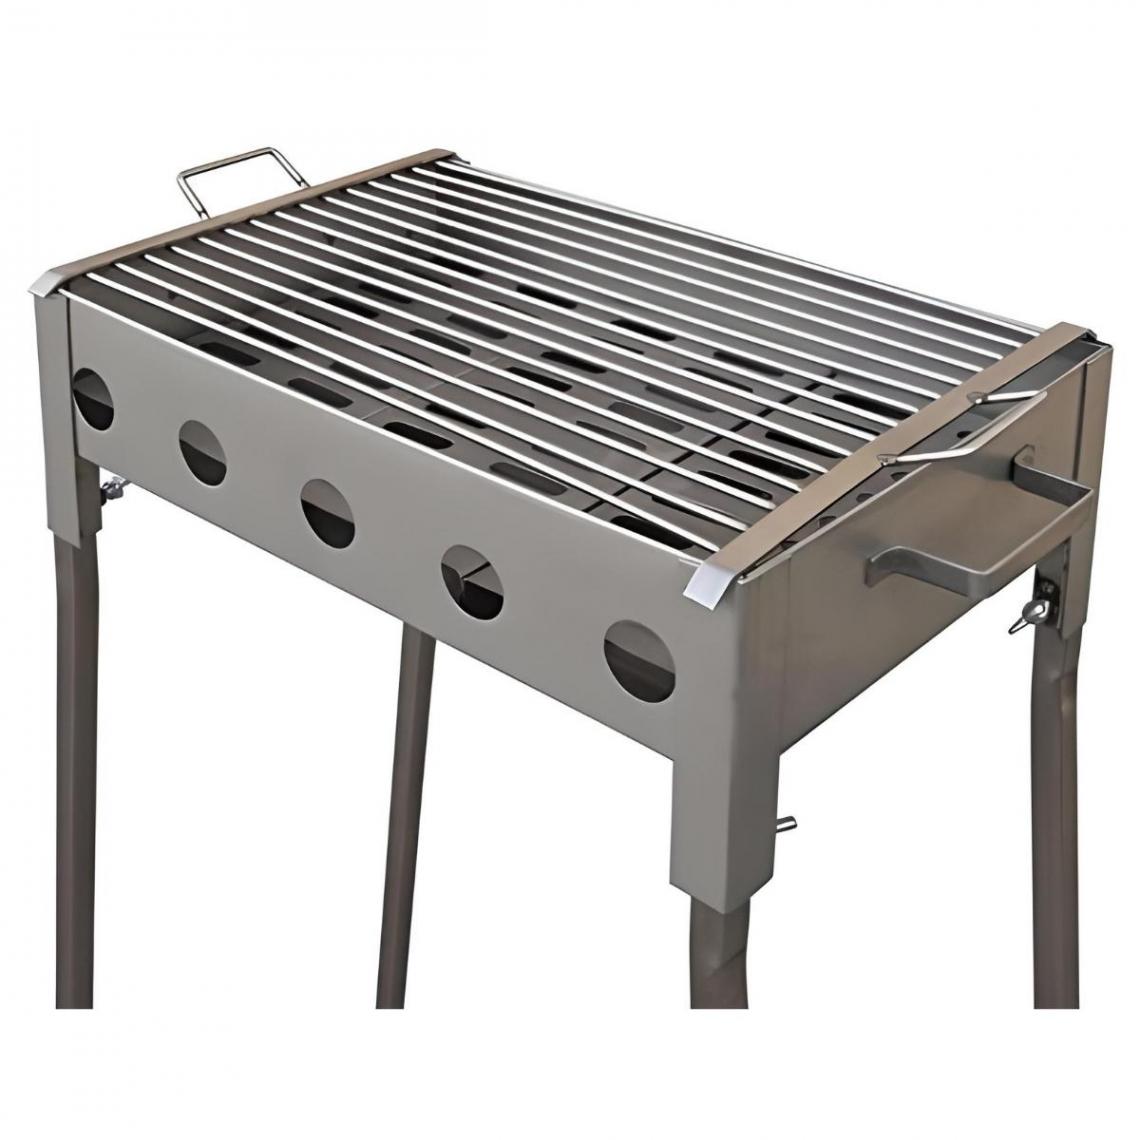 Visiodirect - Barbecue en acier inoxydable coloris Gris - 33 x 33 x 60 cm - Barbecues charbon de bois